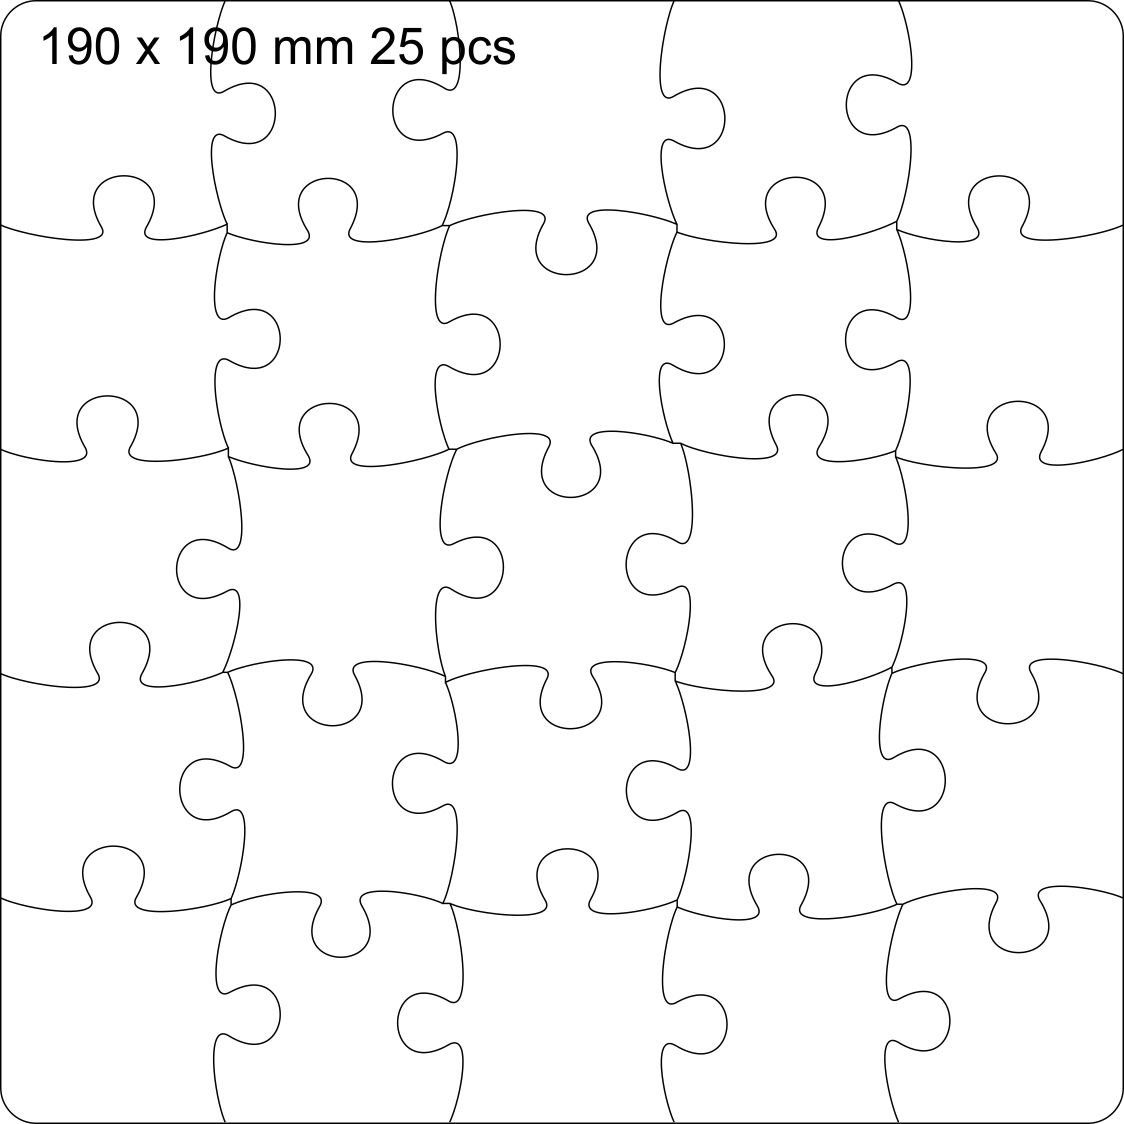 Jigsaw 190 mm square